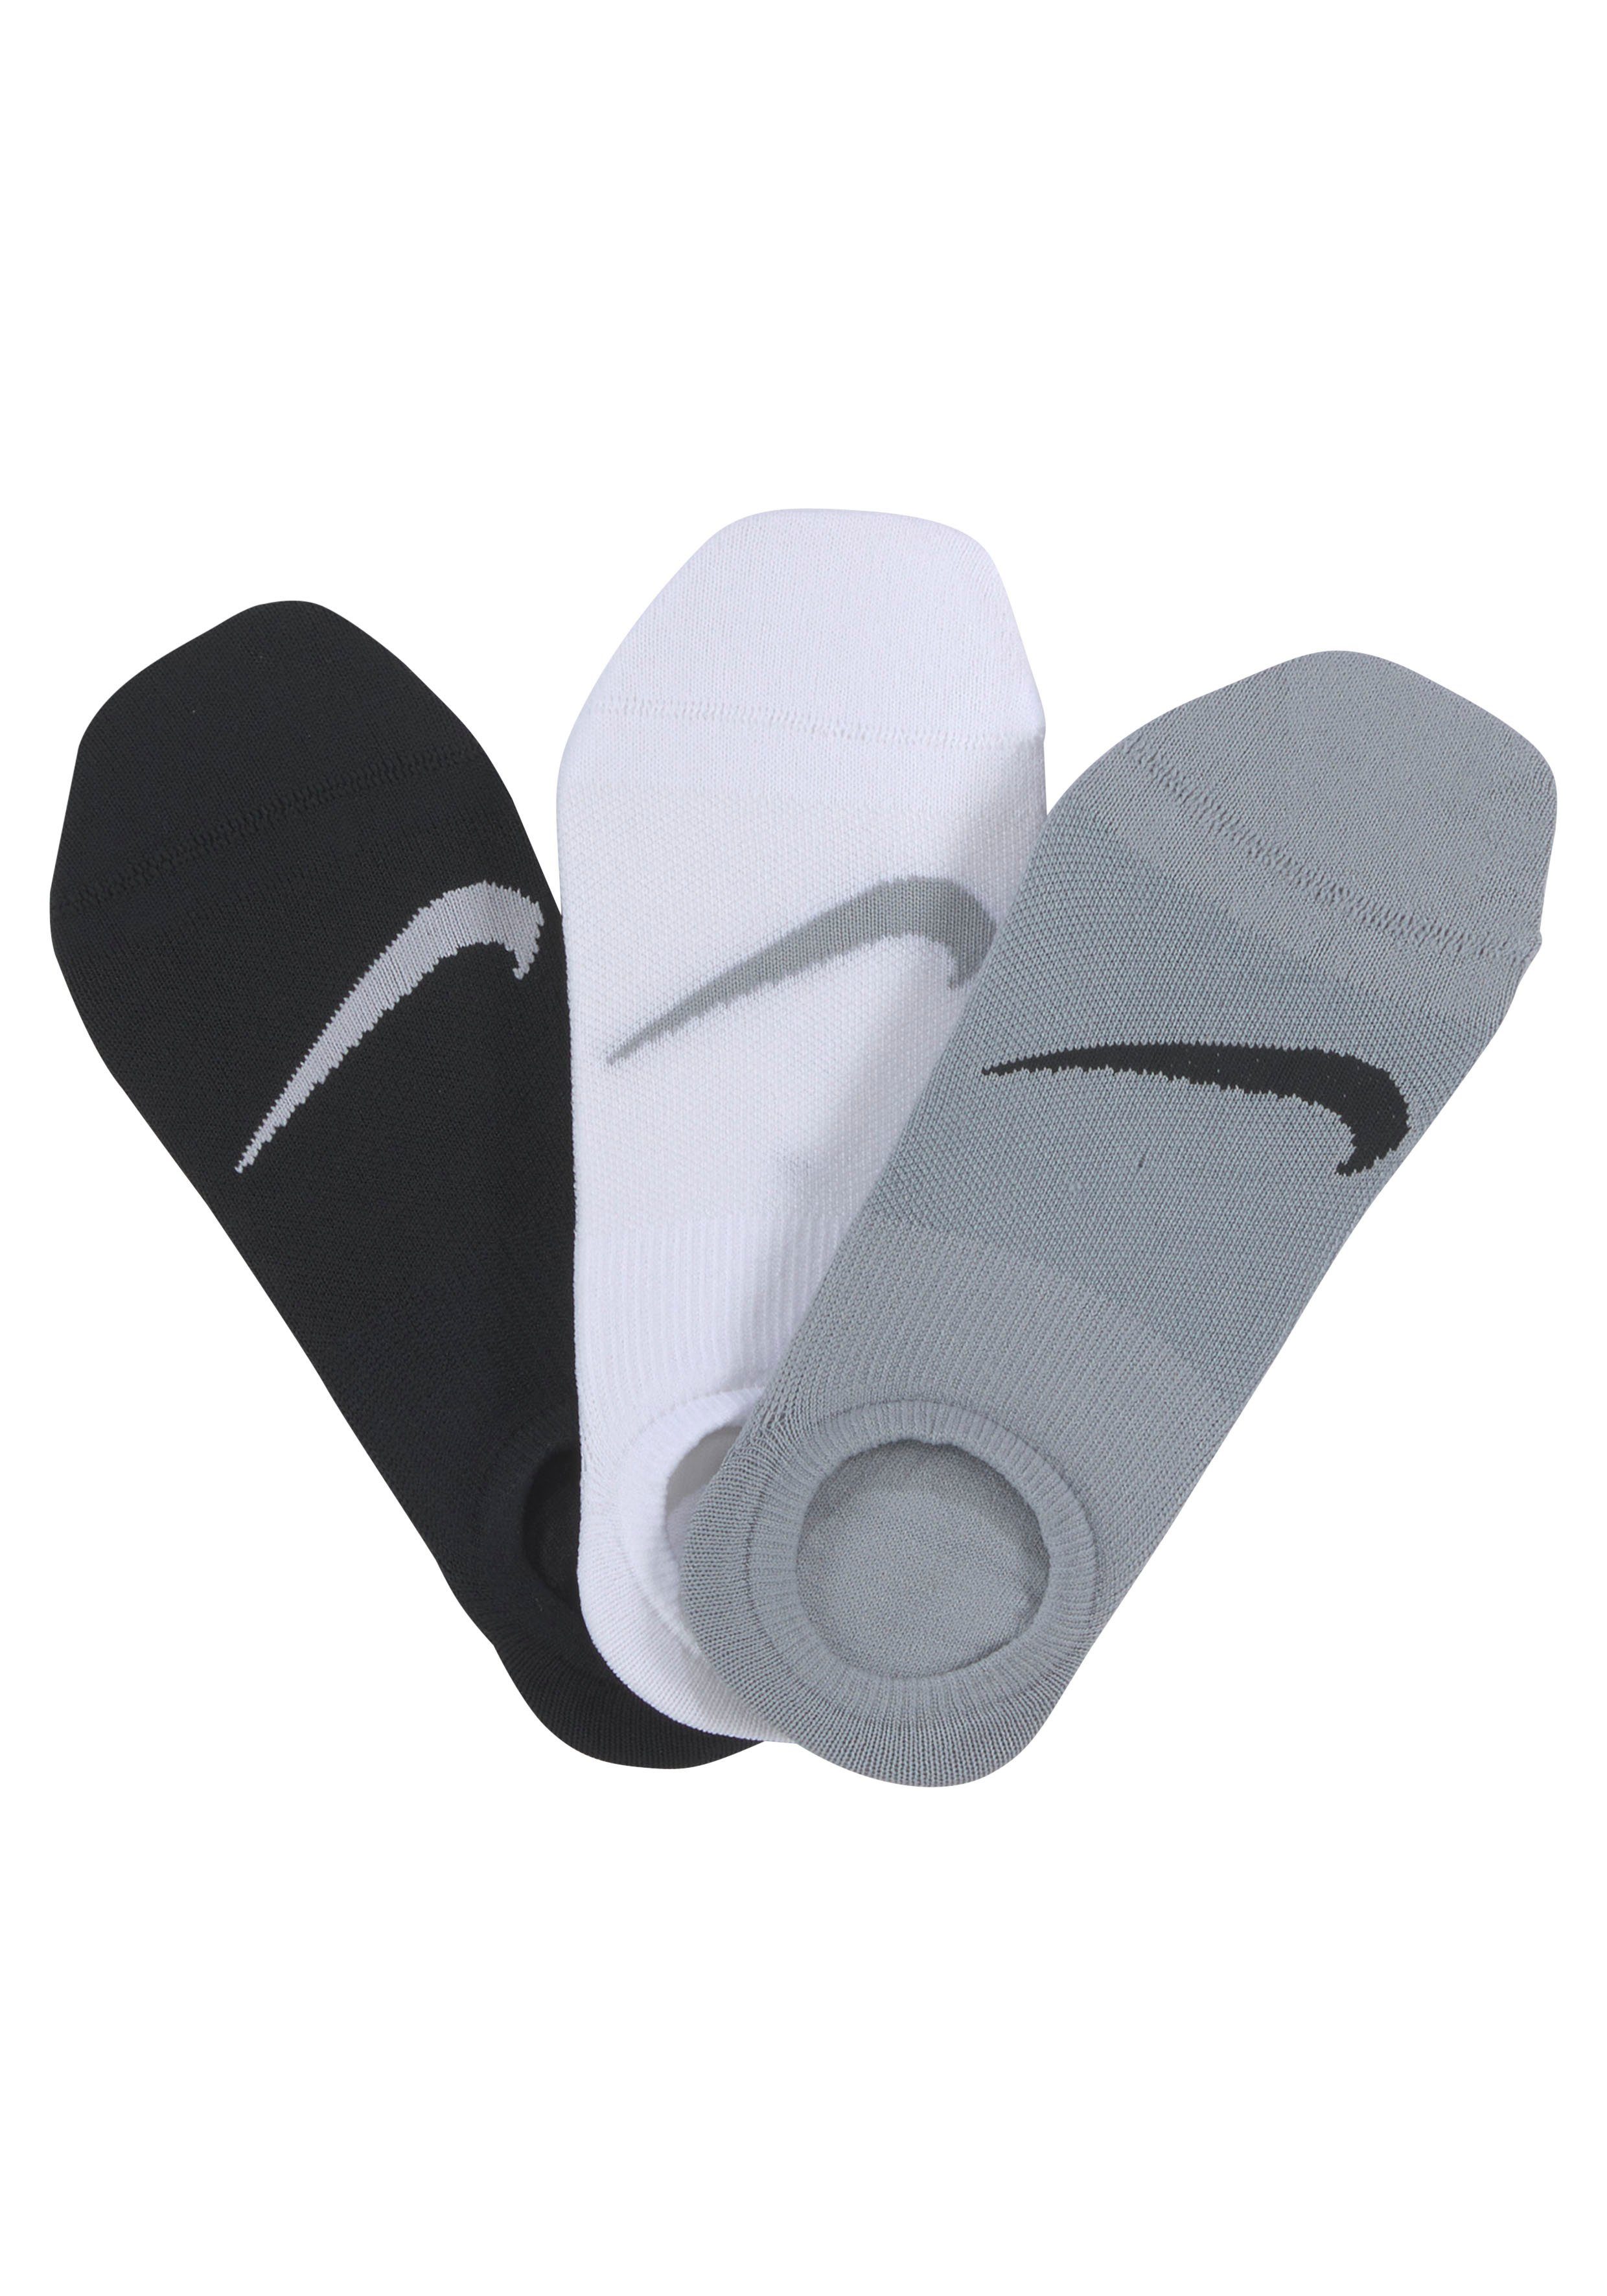 Nike Füßlinge (3-Paar) mit atmungsaktivem Mesh 1x schwarz, 1x grau, 1x weiß